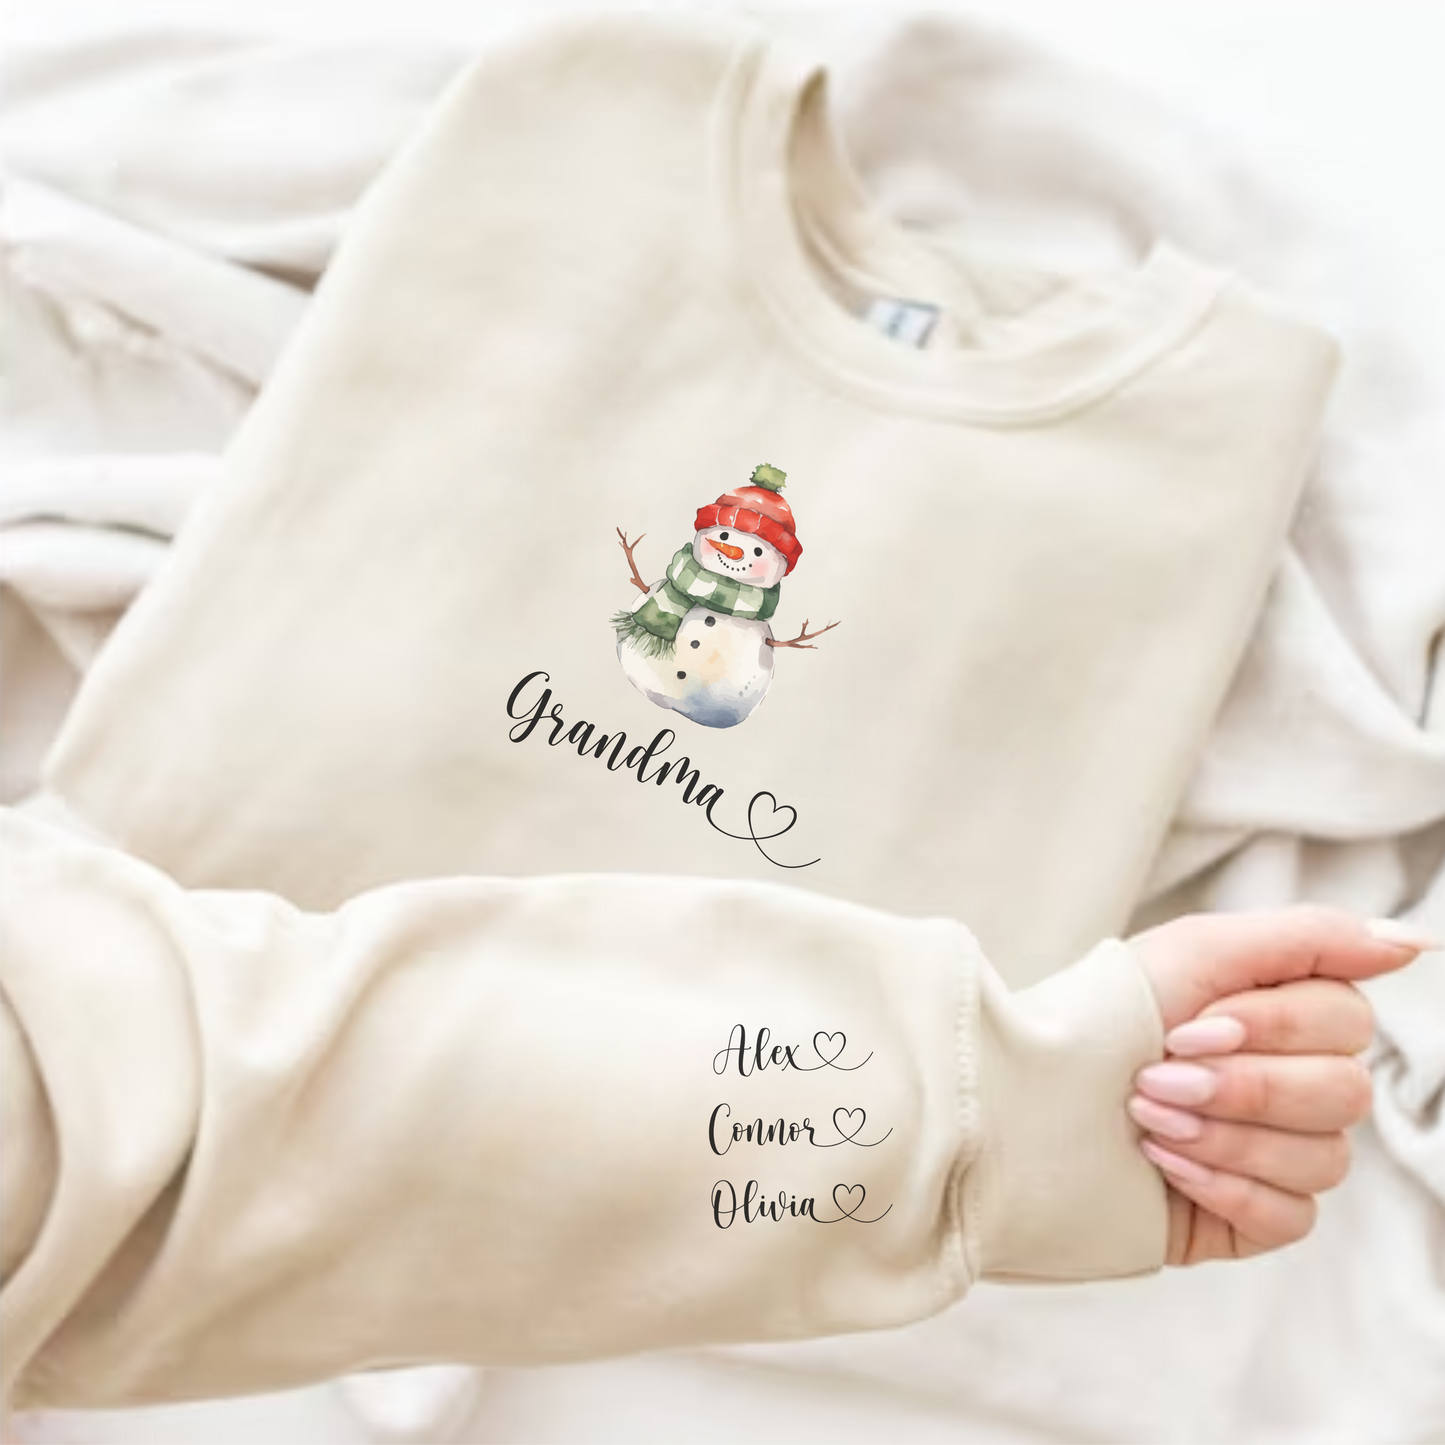 Personalized Grandmother Sweatshirt with grandchildren names - Canadohta Custom Creations LLC